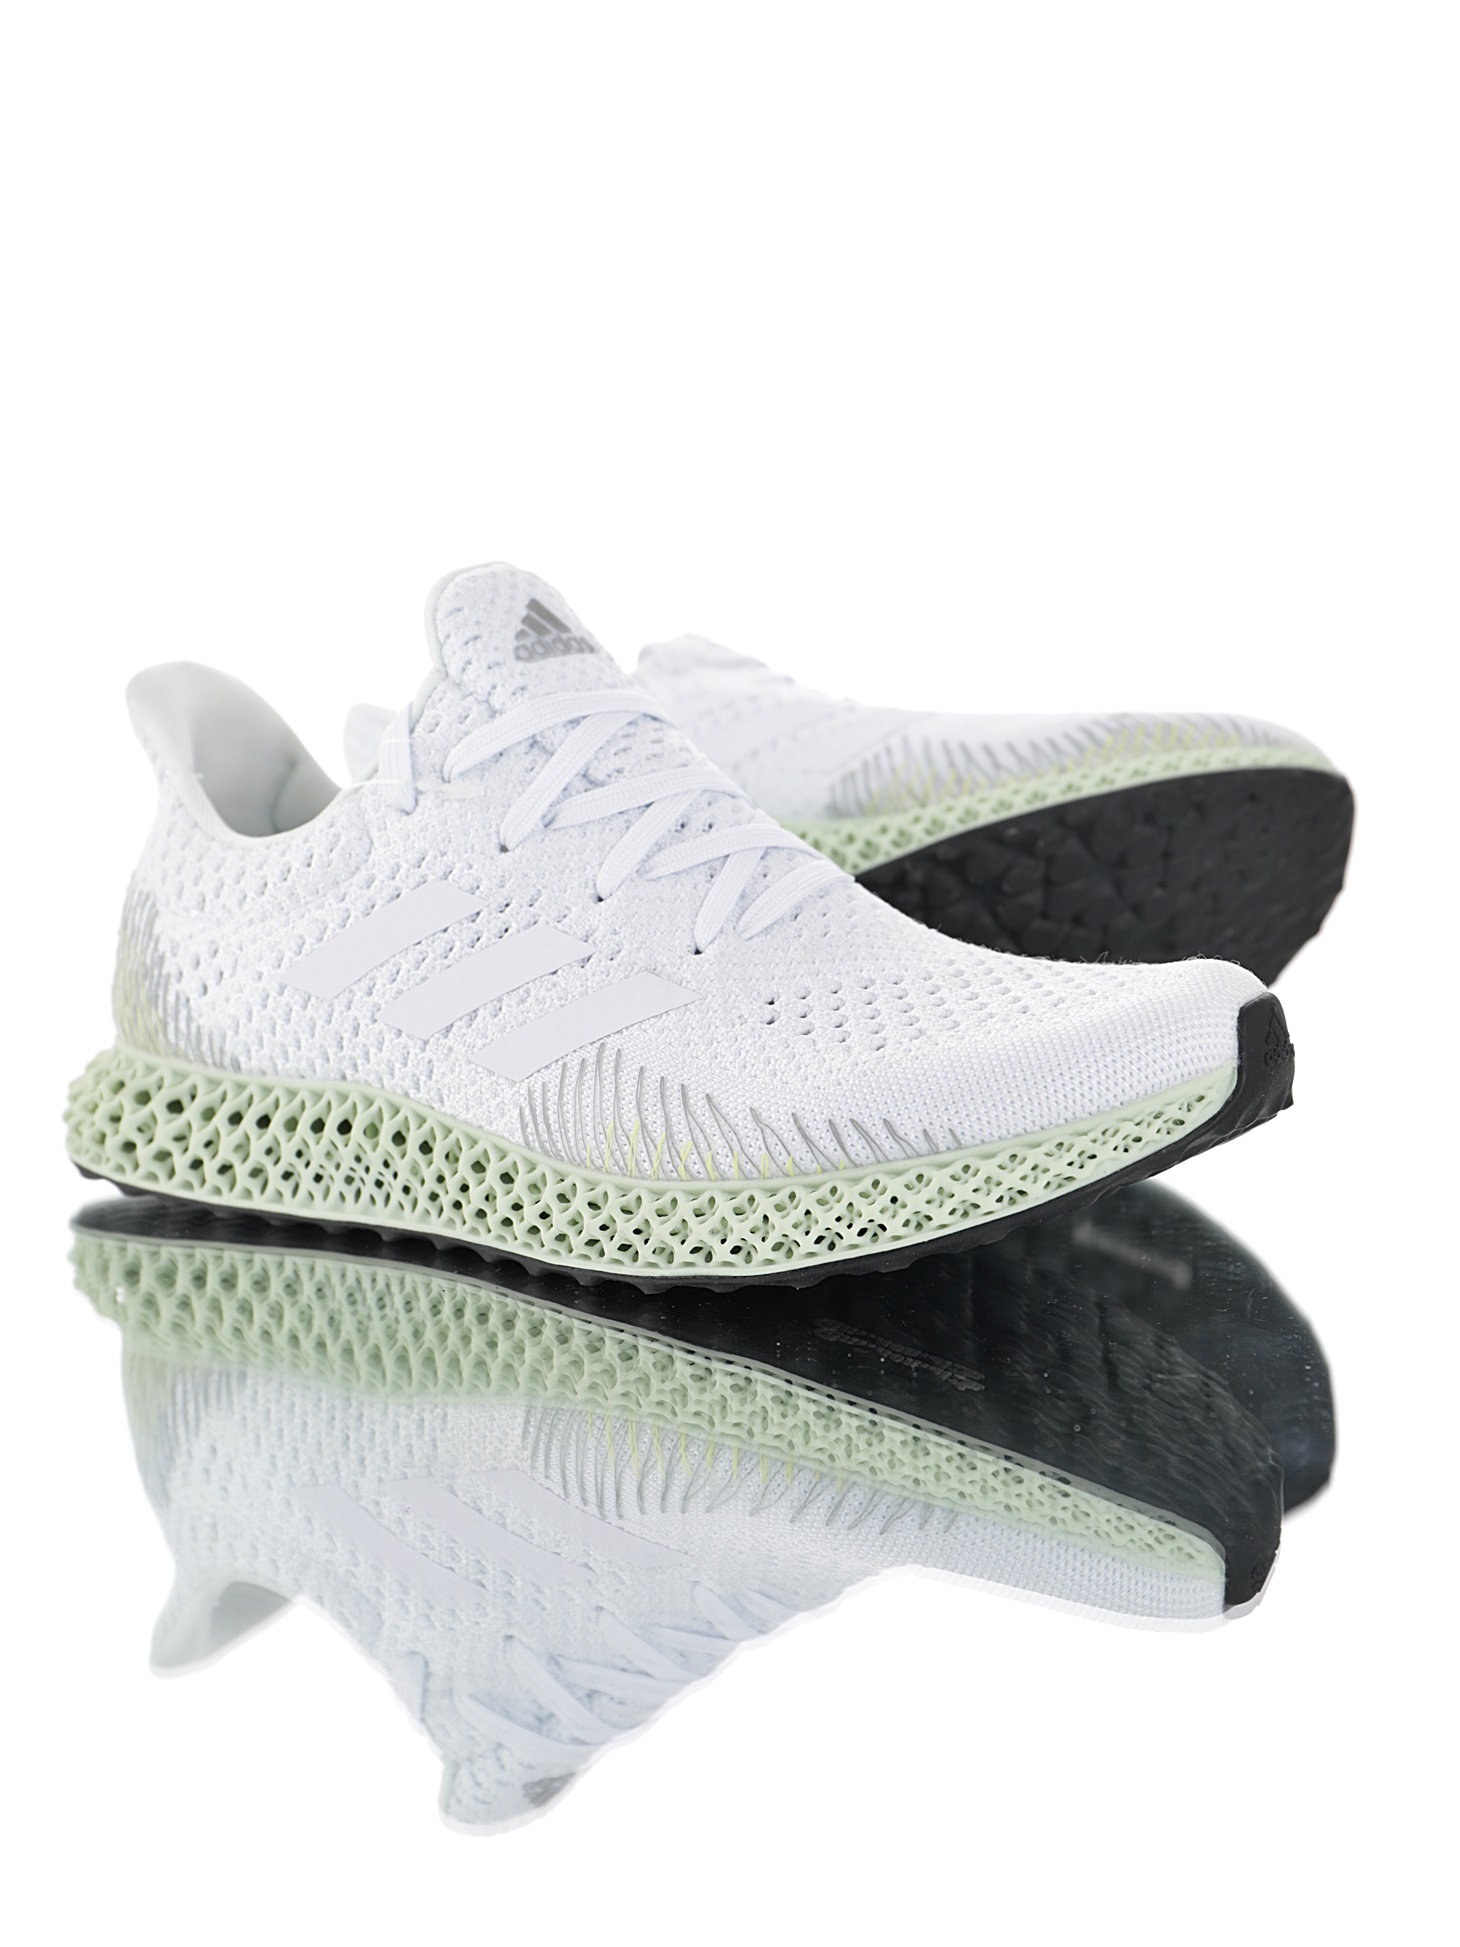 adidas futurecraft 4d 呼吸針織面男款高科技慢跑鞋 - 20190722160942-783092455.jpg(圖)